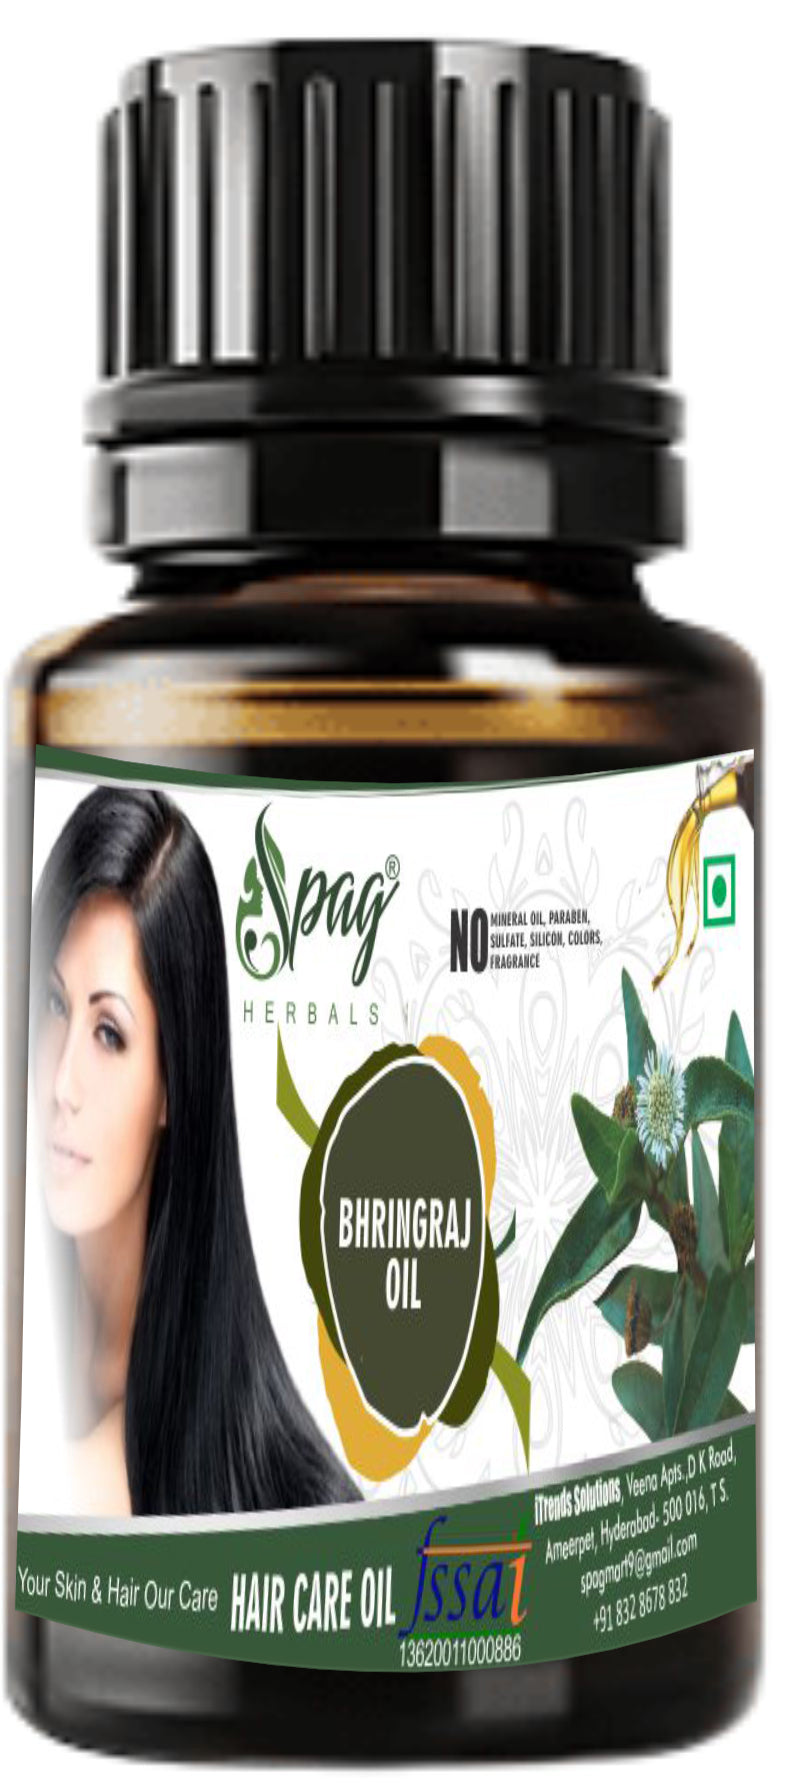 Spag Herbals Bhringraj Oil For Hair & Skin Care